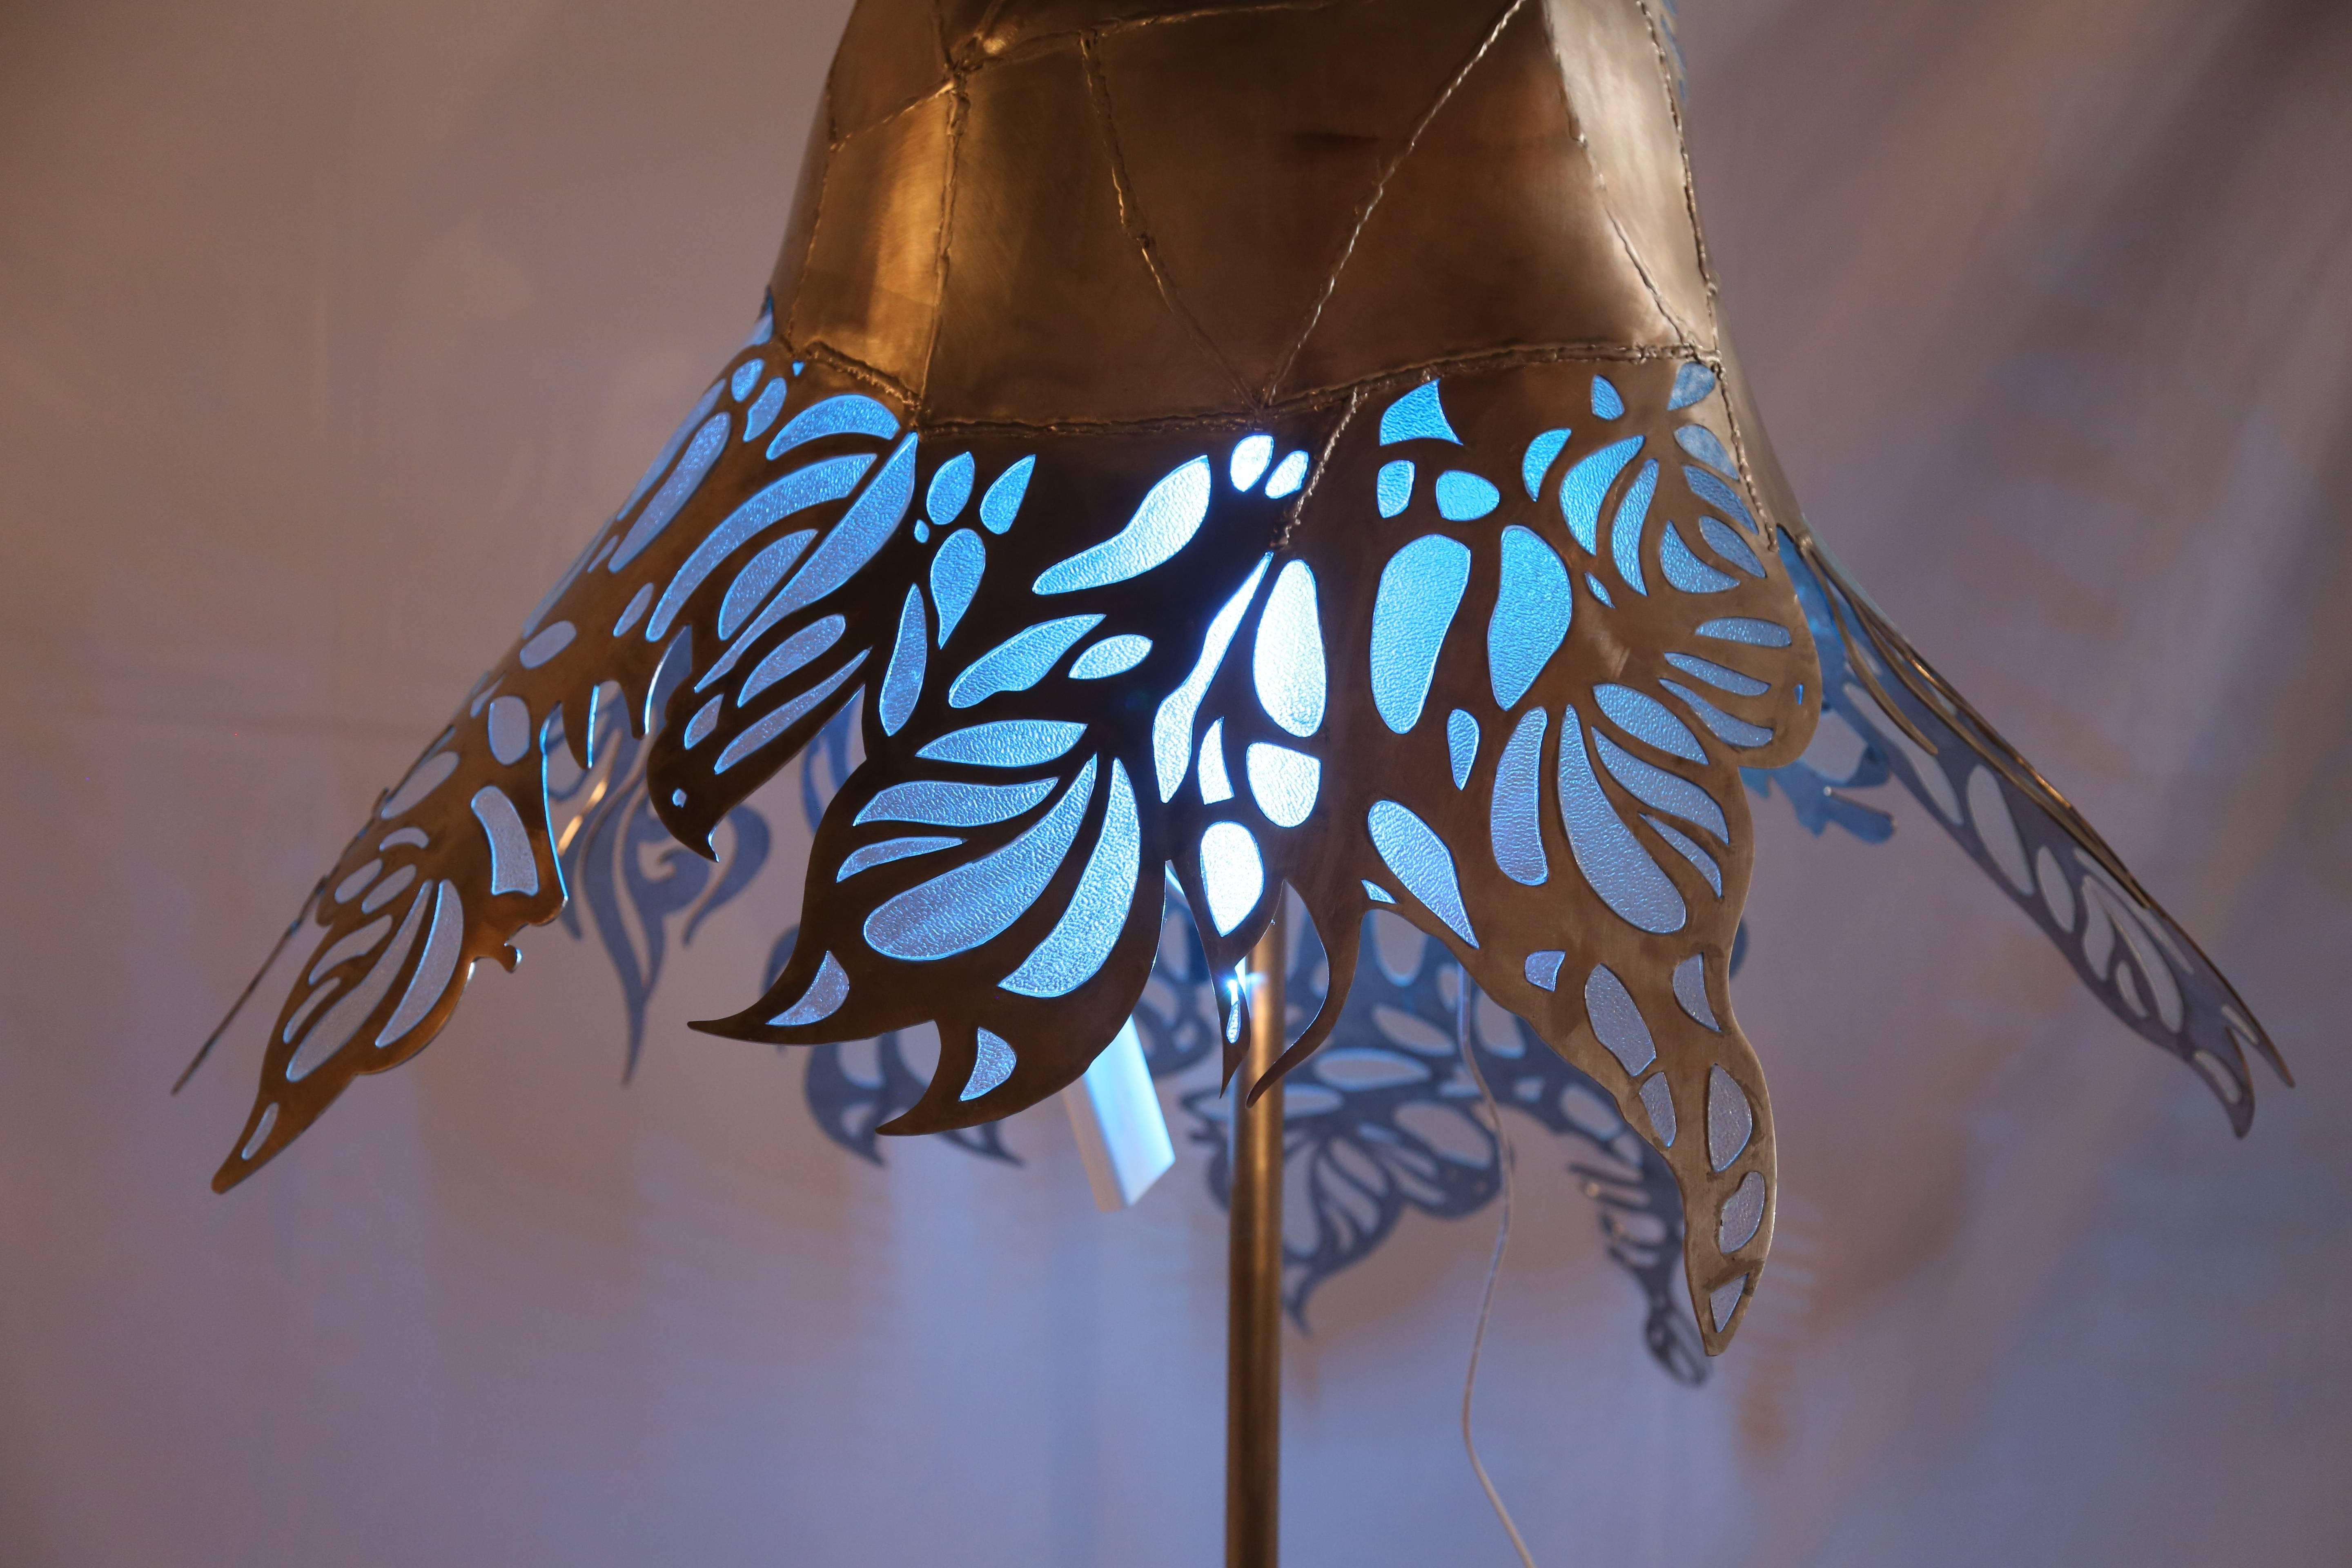 Metalwork Illuminating Steel and Glass Euphoric Dress Sculpture